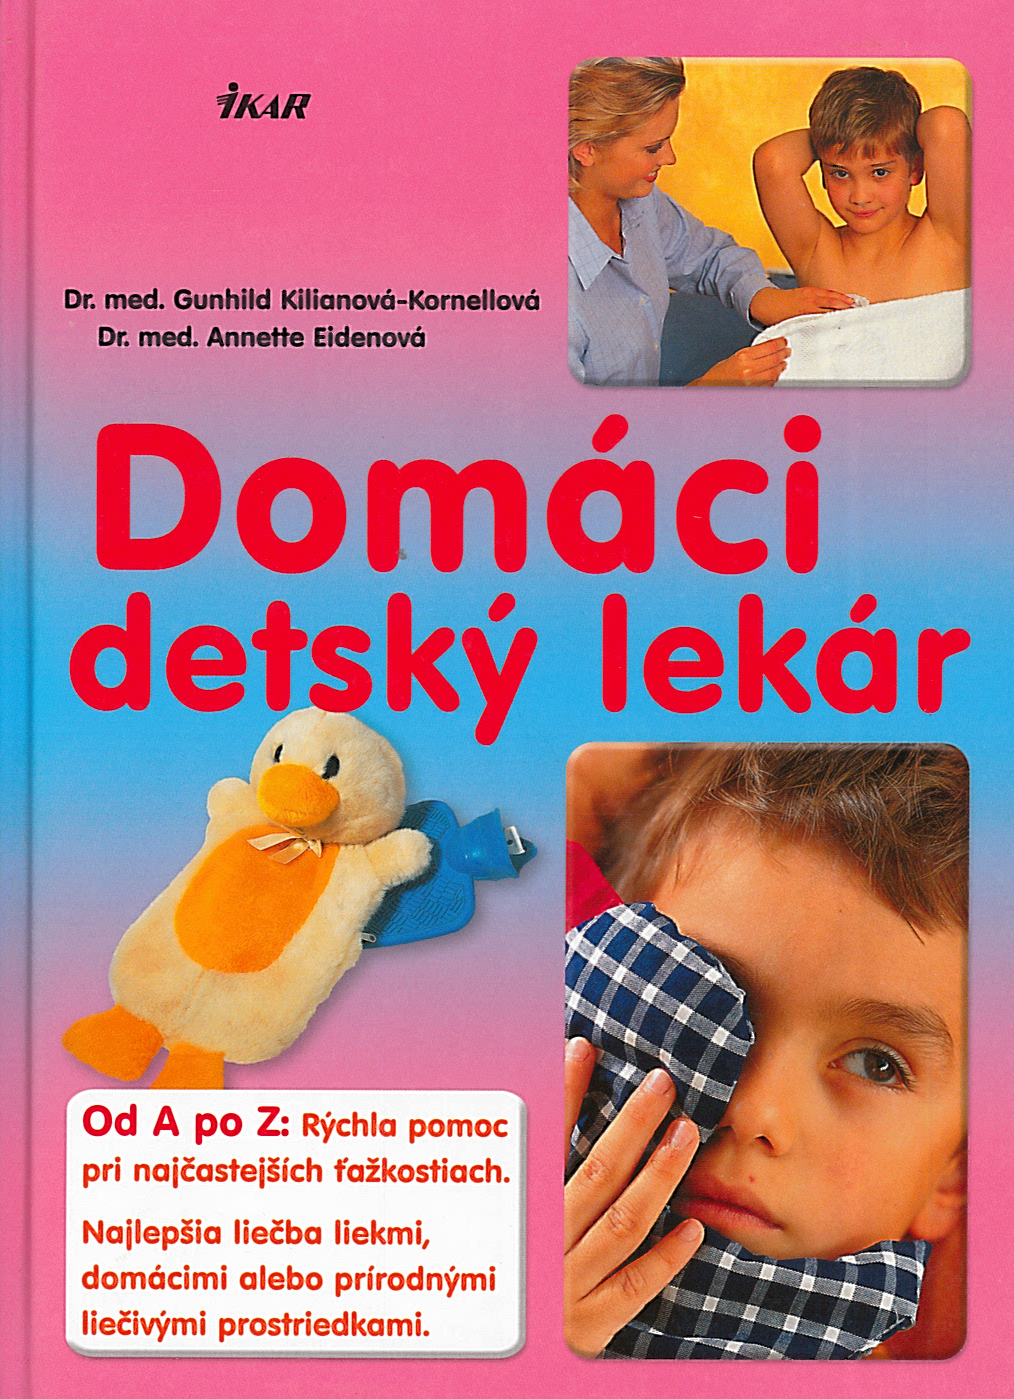 Domáci detský lekár (Gunhild Kilian-Kornellová, Annette Eidenová)